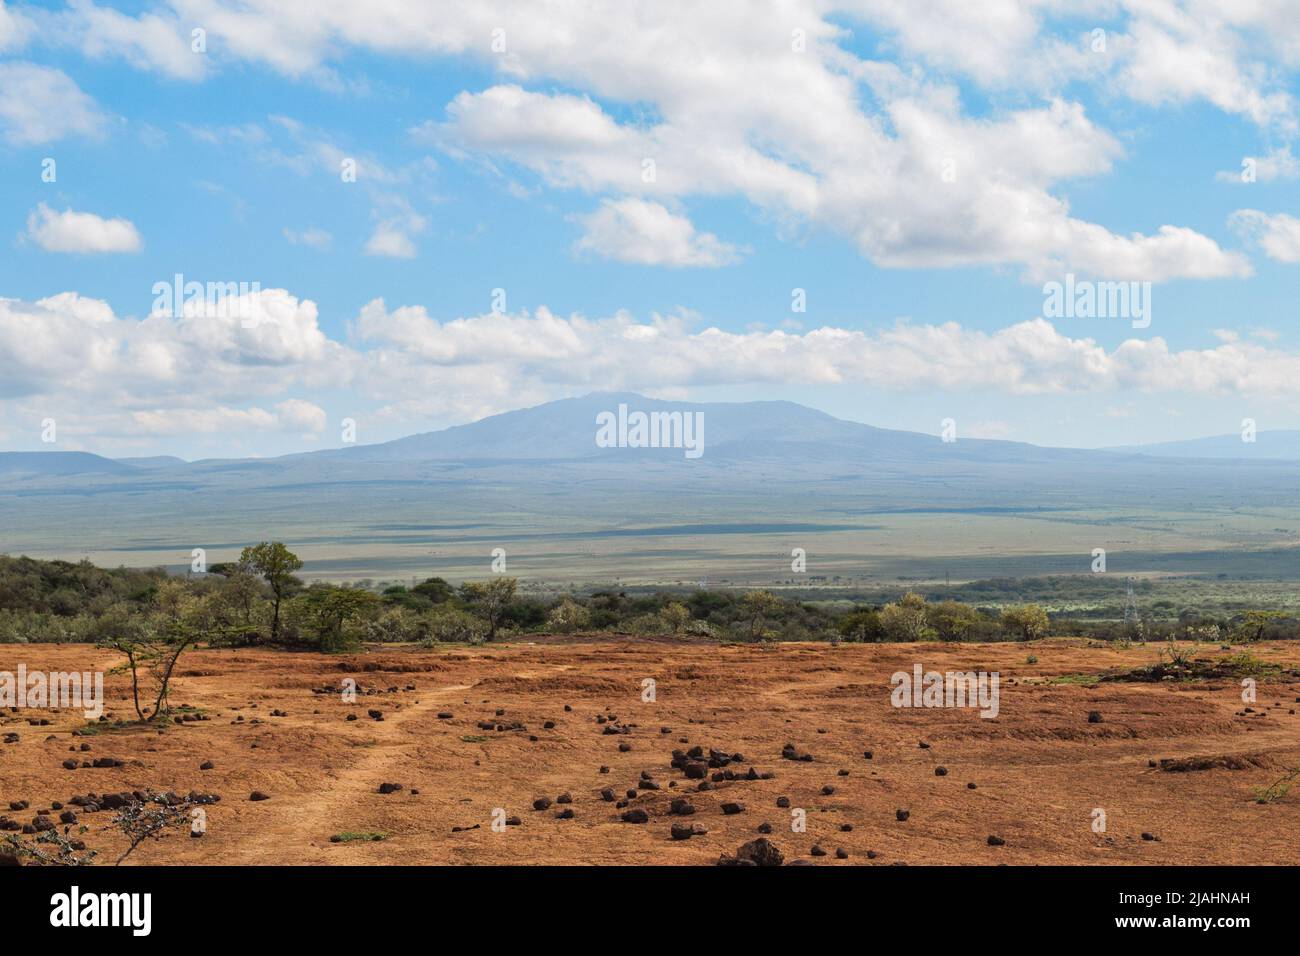 Mount Longonot against sky in Naivasha, Kenya Stock Photo